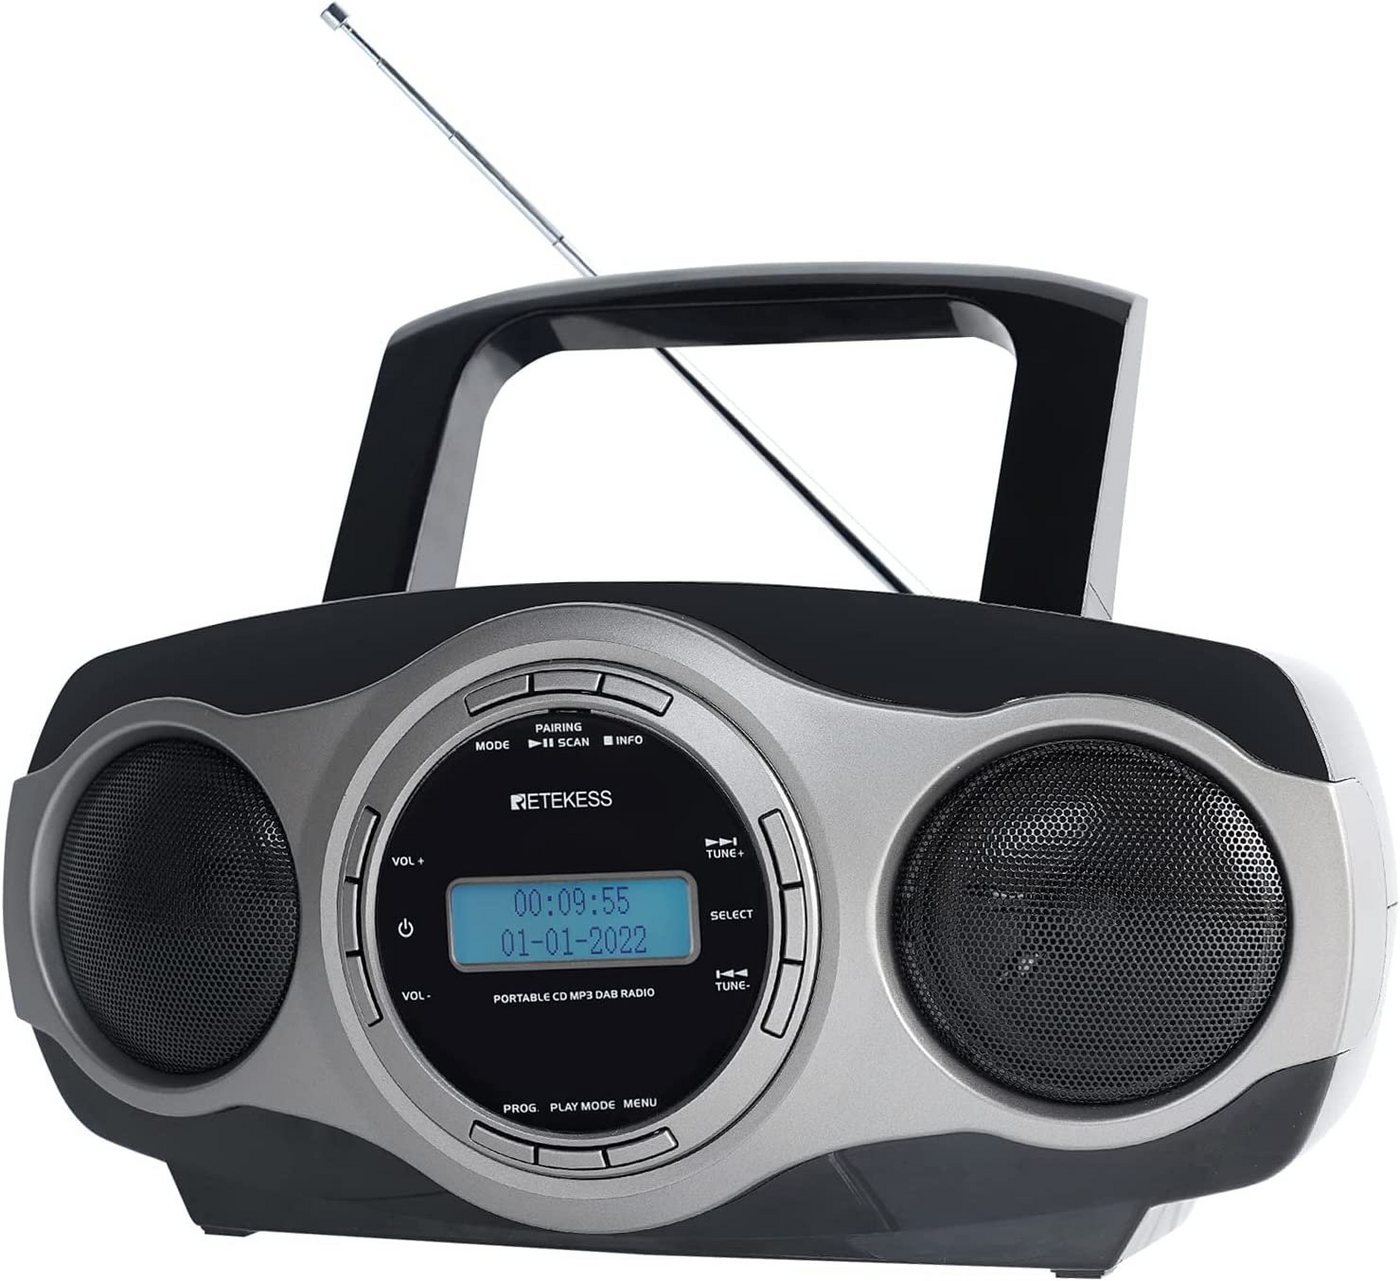 Retekess TR631 DAB Radio mit CD-Player CD-Radiorecorder (DAB FM Radio mit Bluetooth, FM-Stereo, MP3 Player) von Retekess